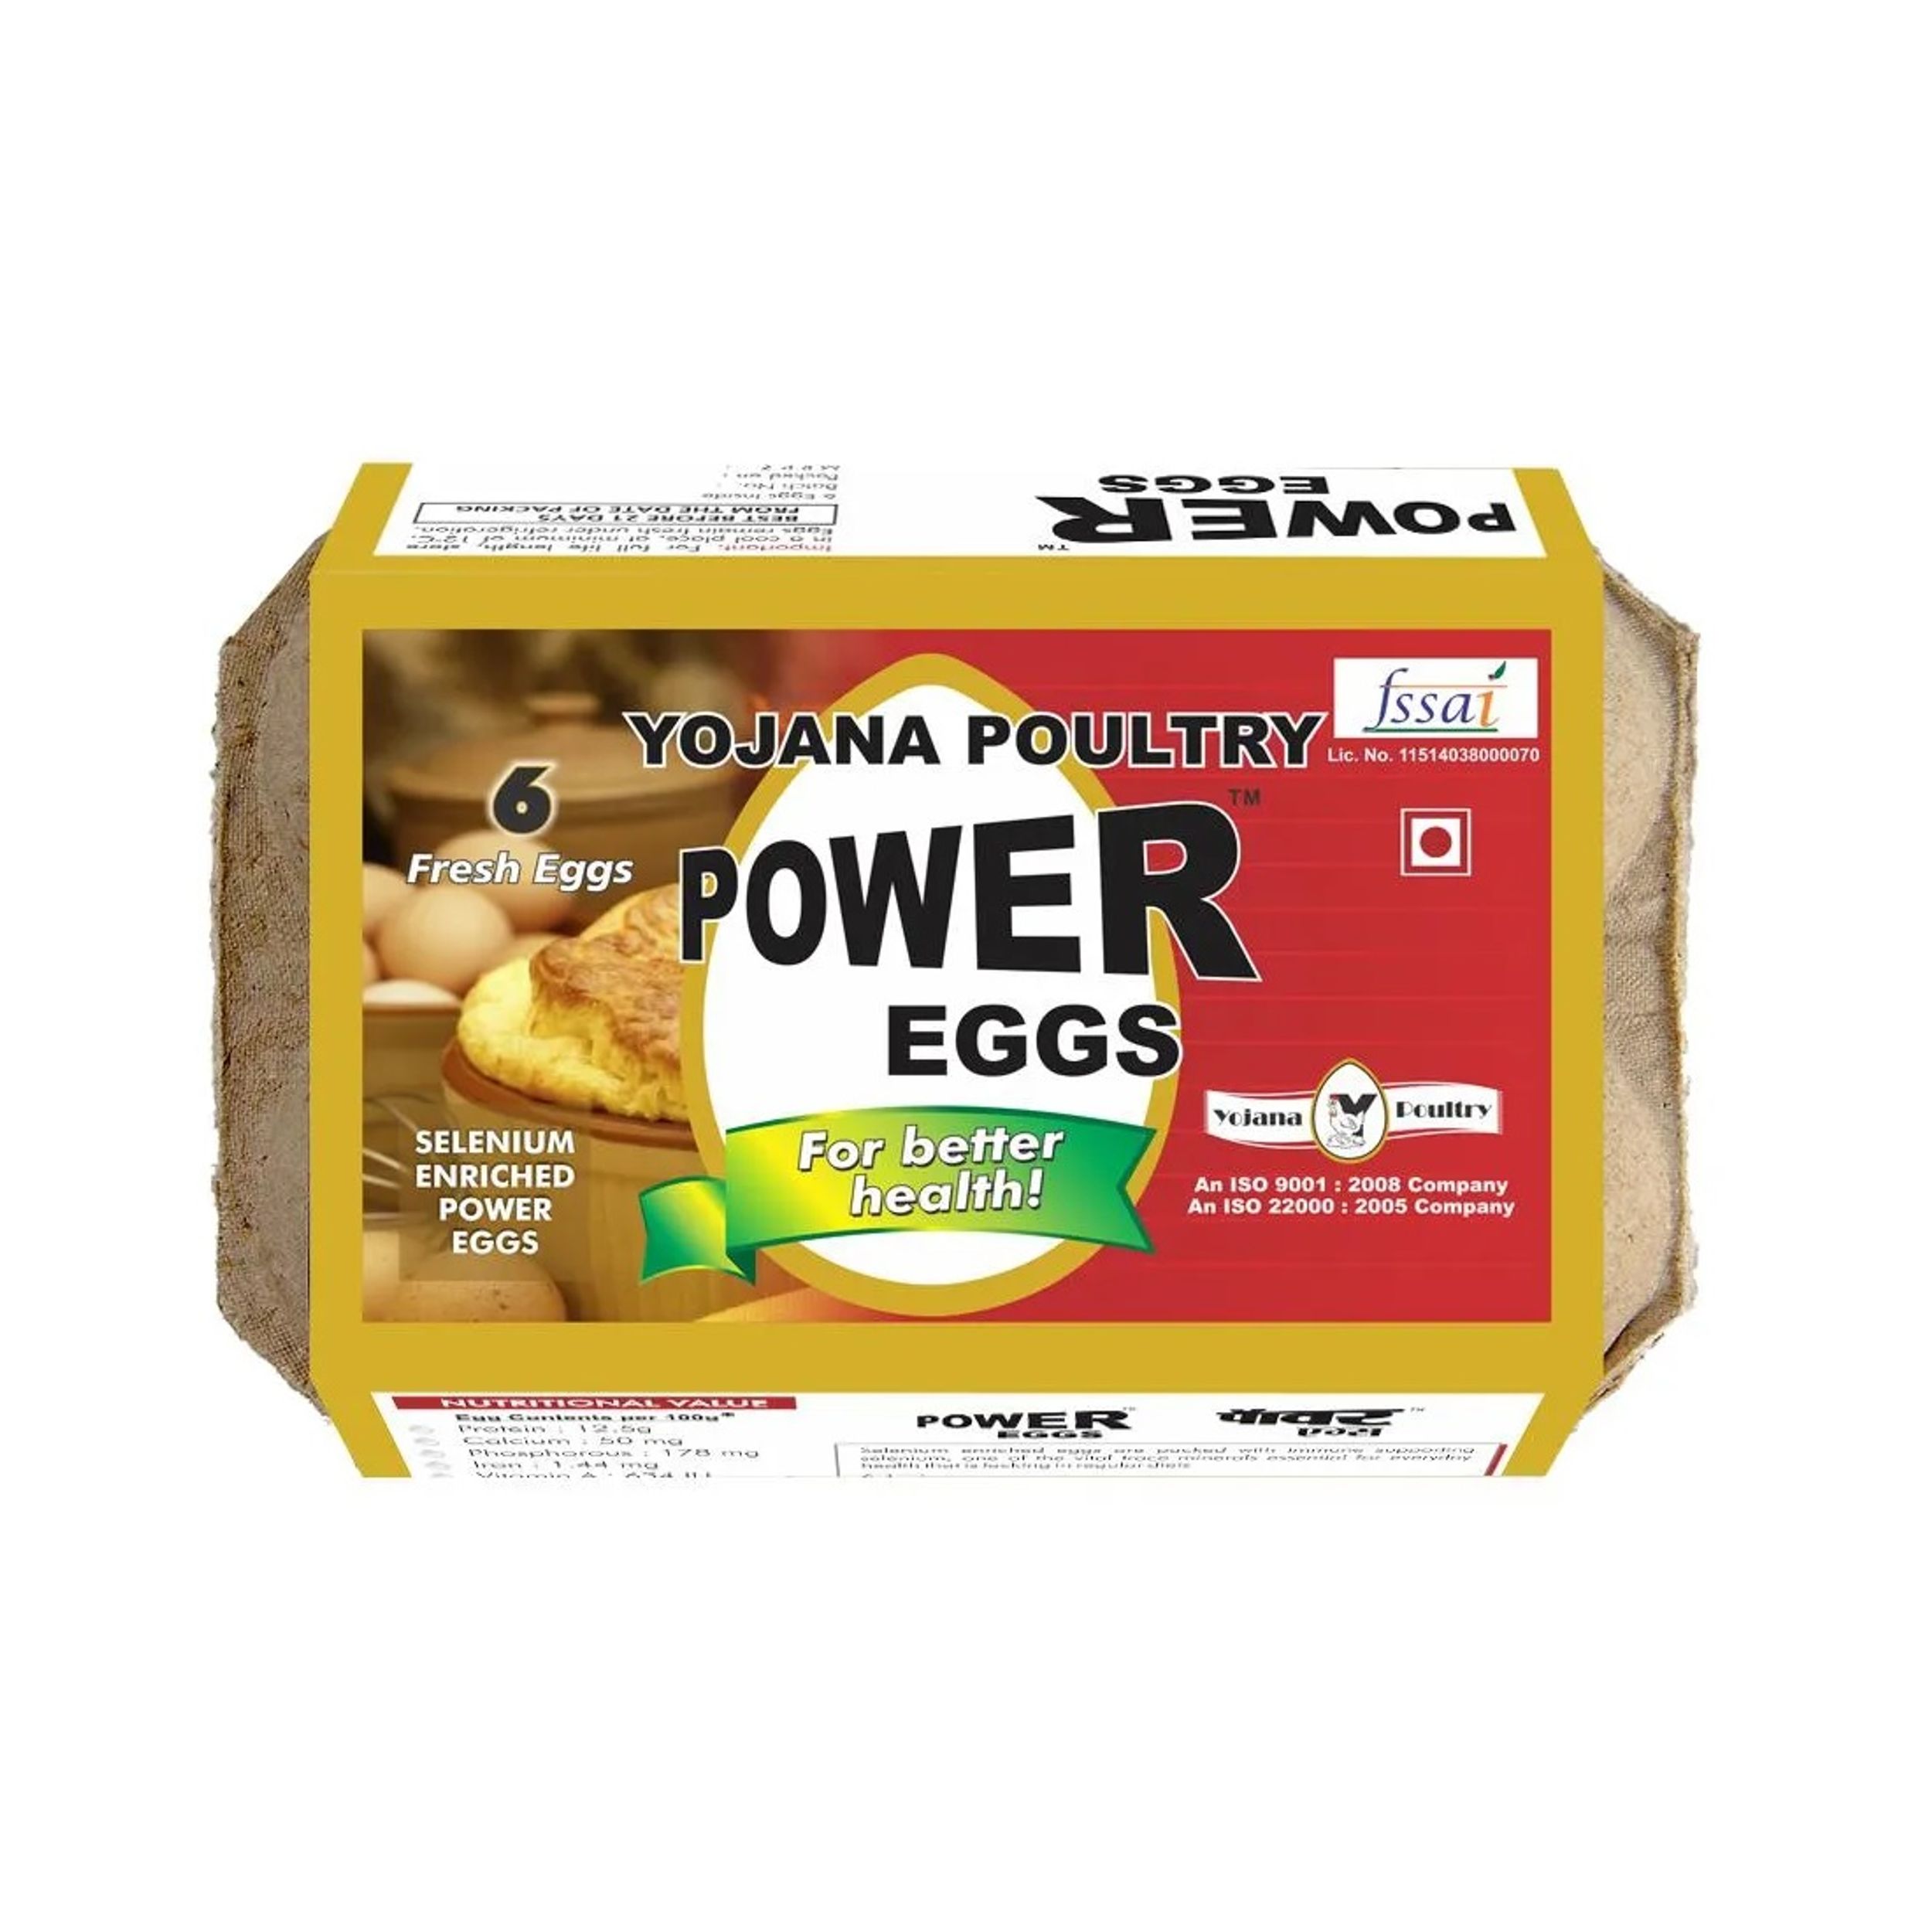 Yojana Poultry - Power Eggs : Yojana Poultry We are